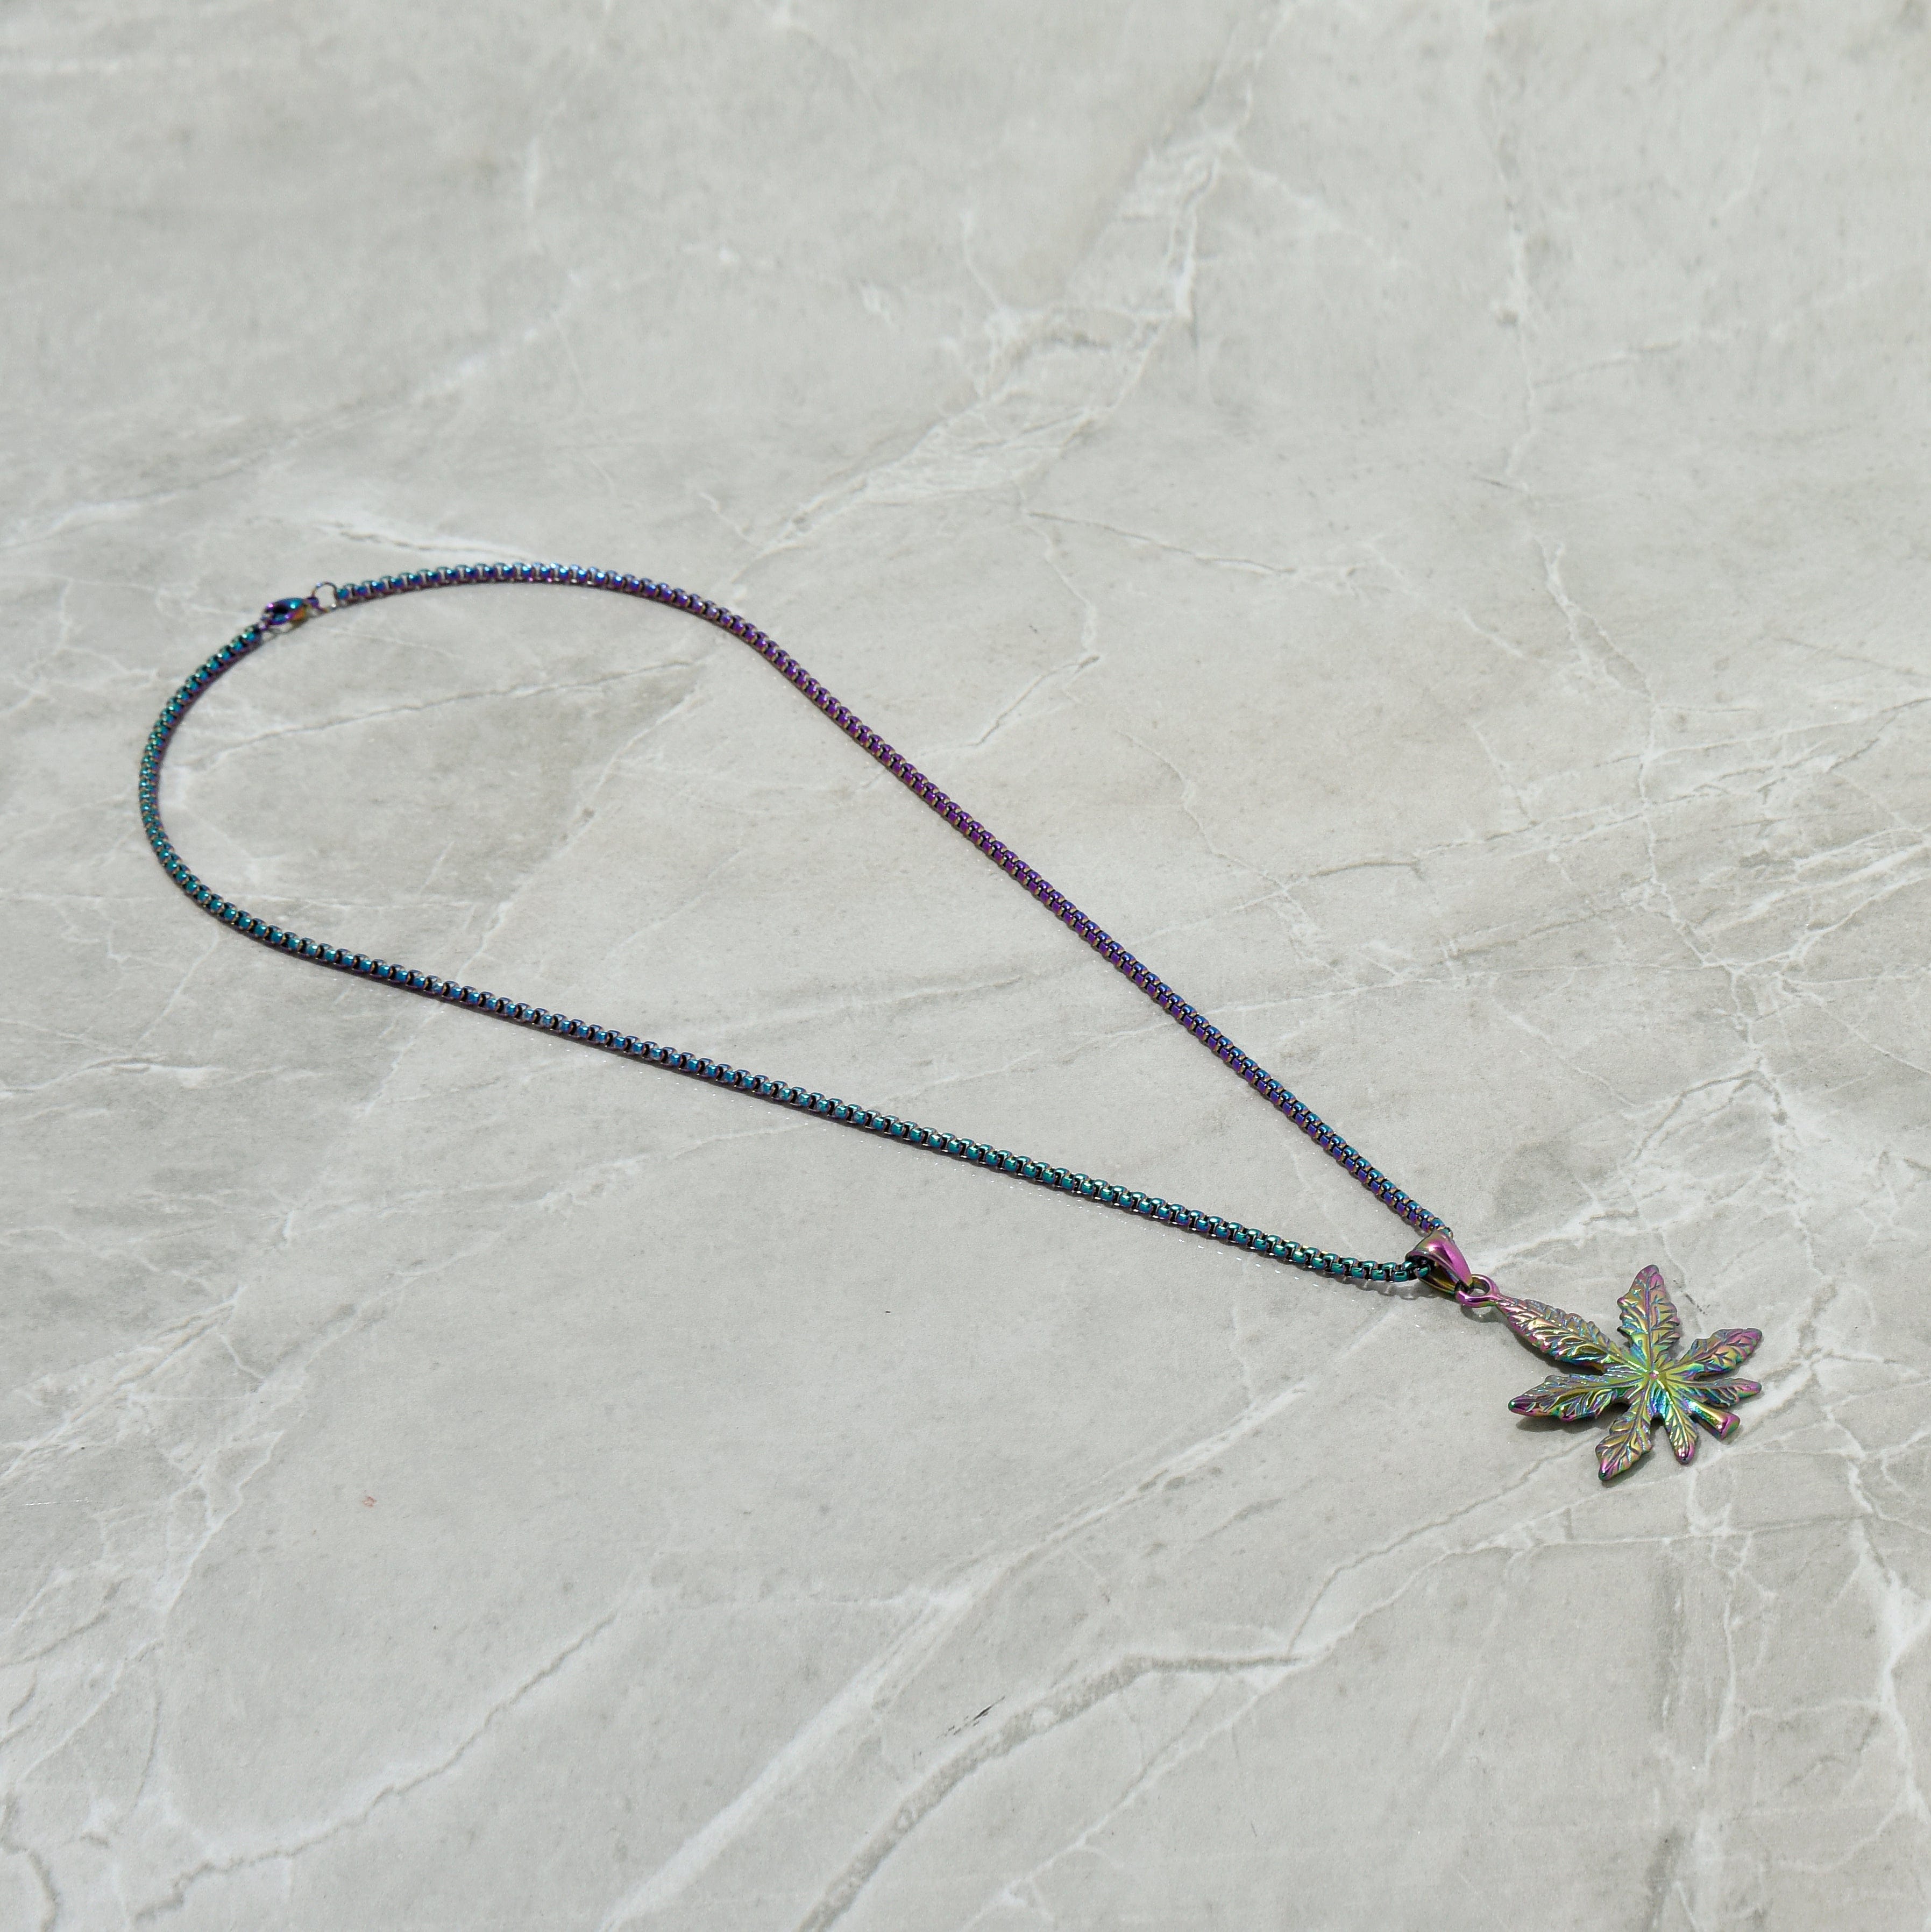 Kalifano Steel Hearts Jewelry Aurora Borealis Maple Steel Hearts Necklace SHN503-AB